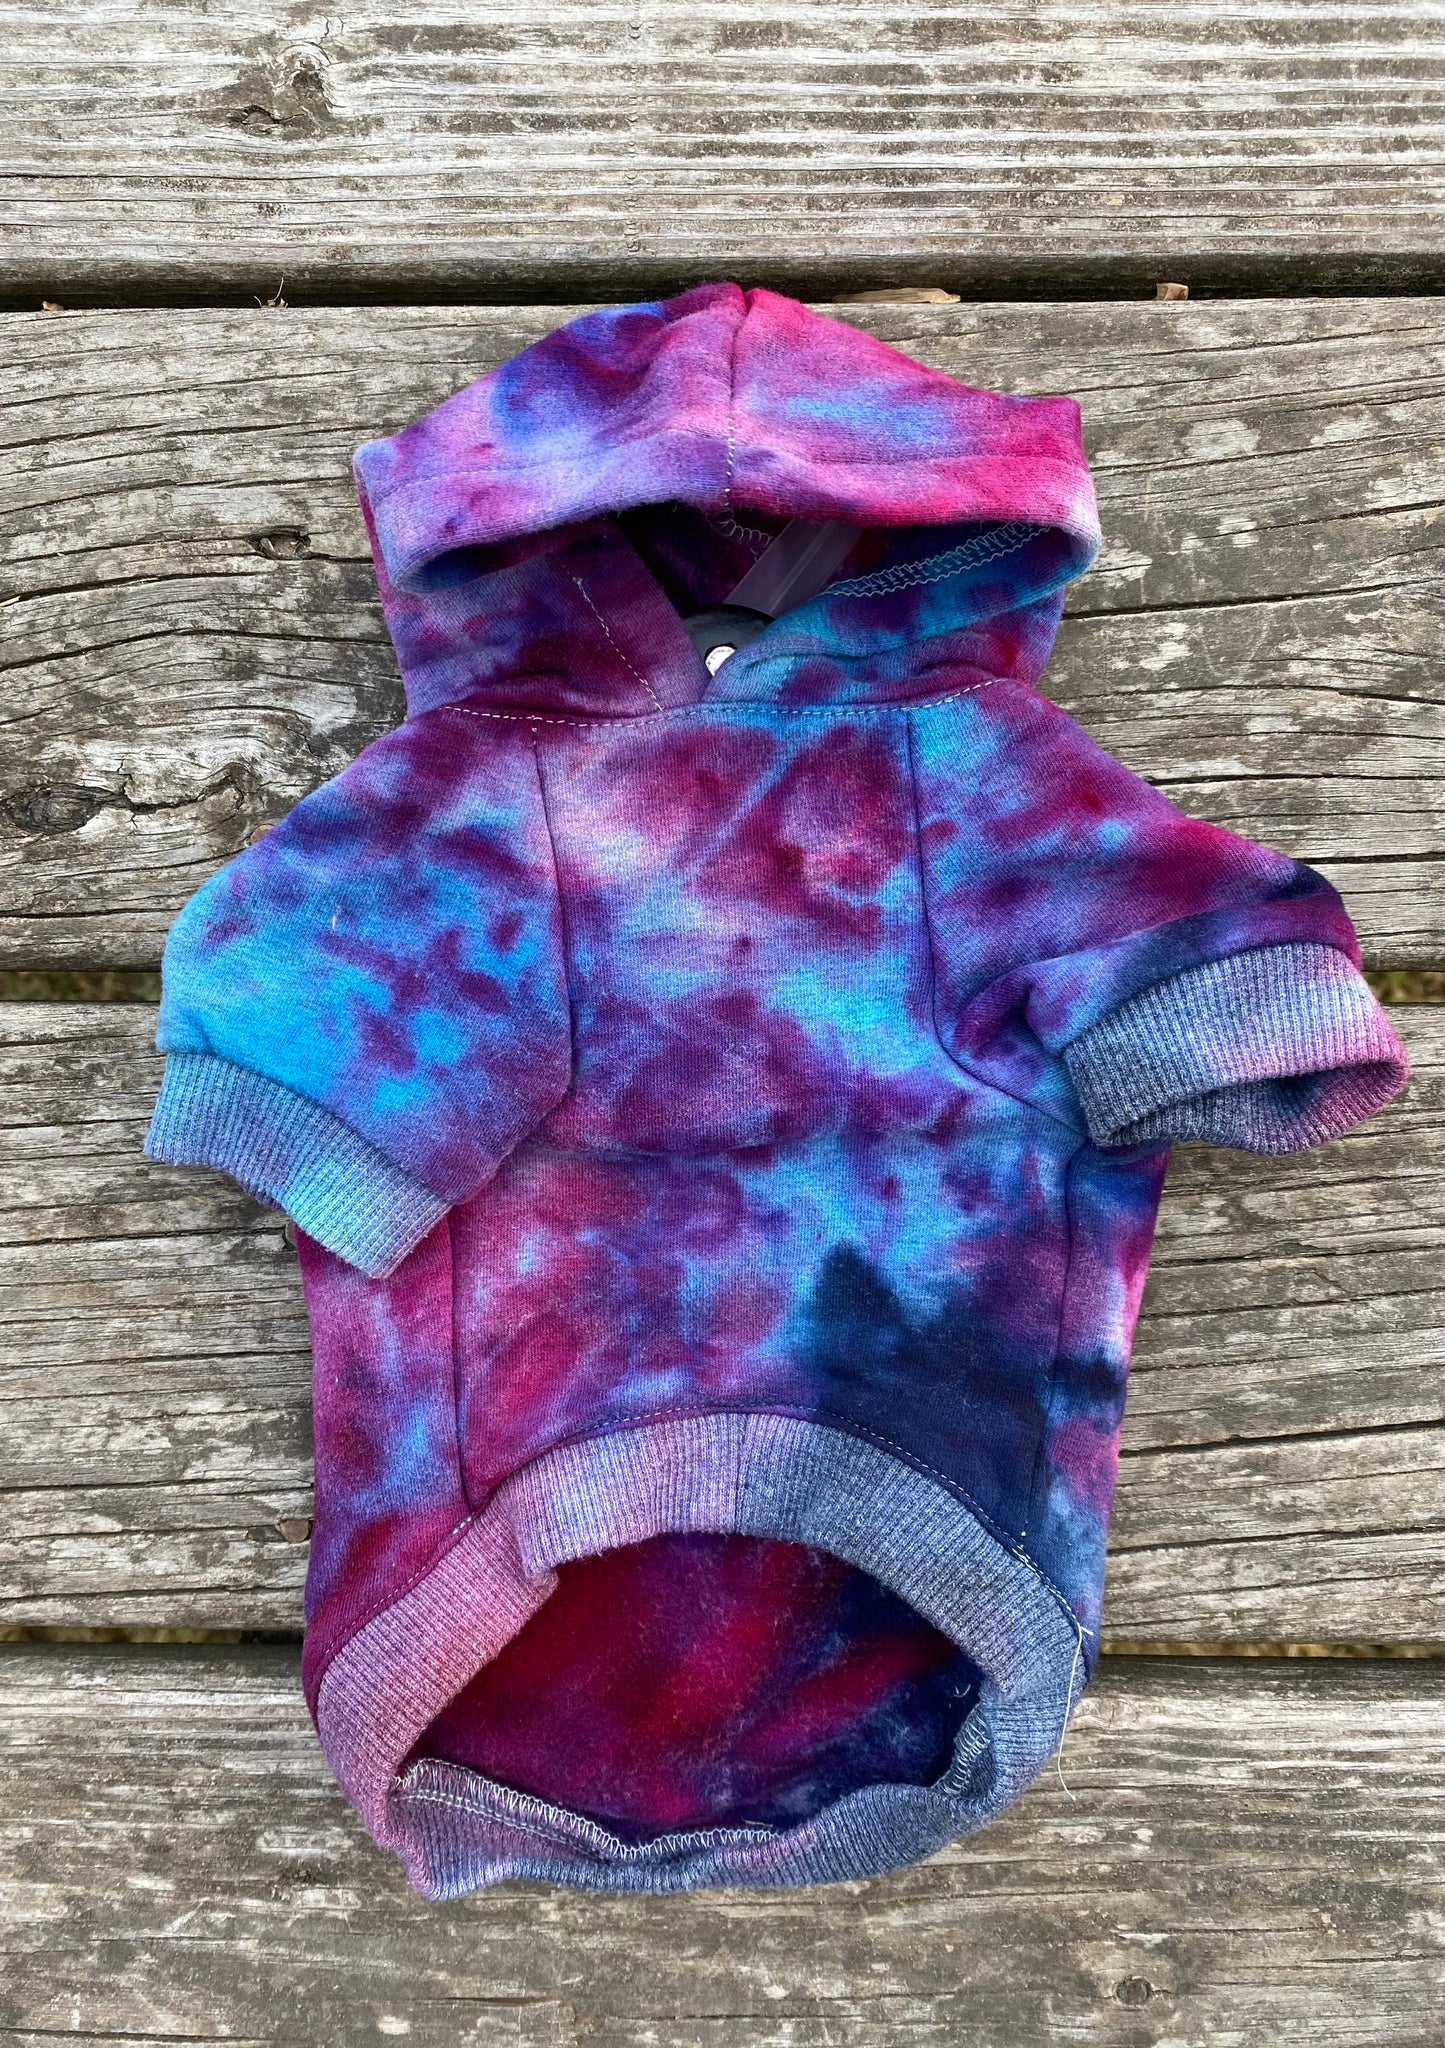 Small flex-fit dog hoodie doggie design purple blues pinks